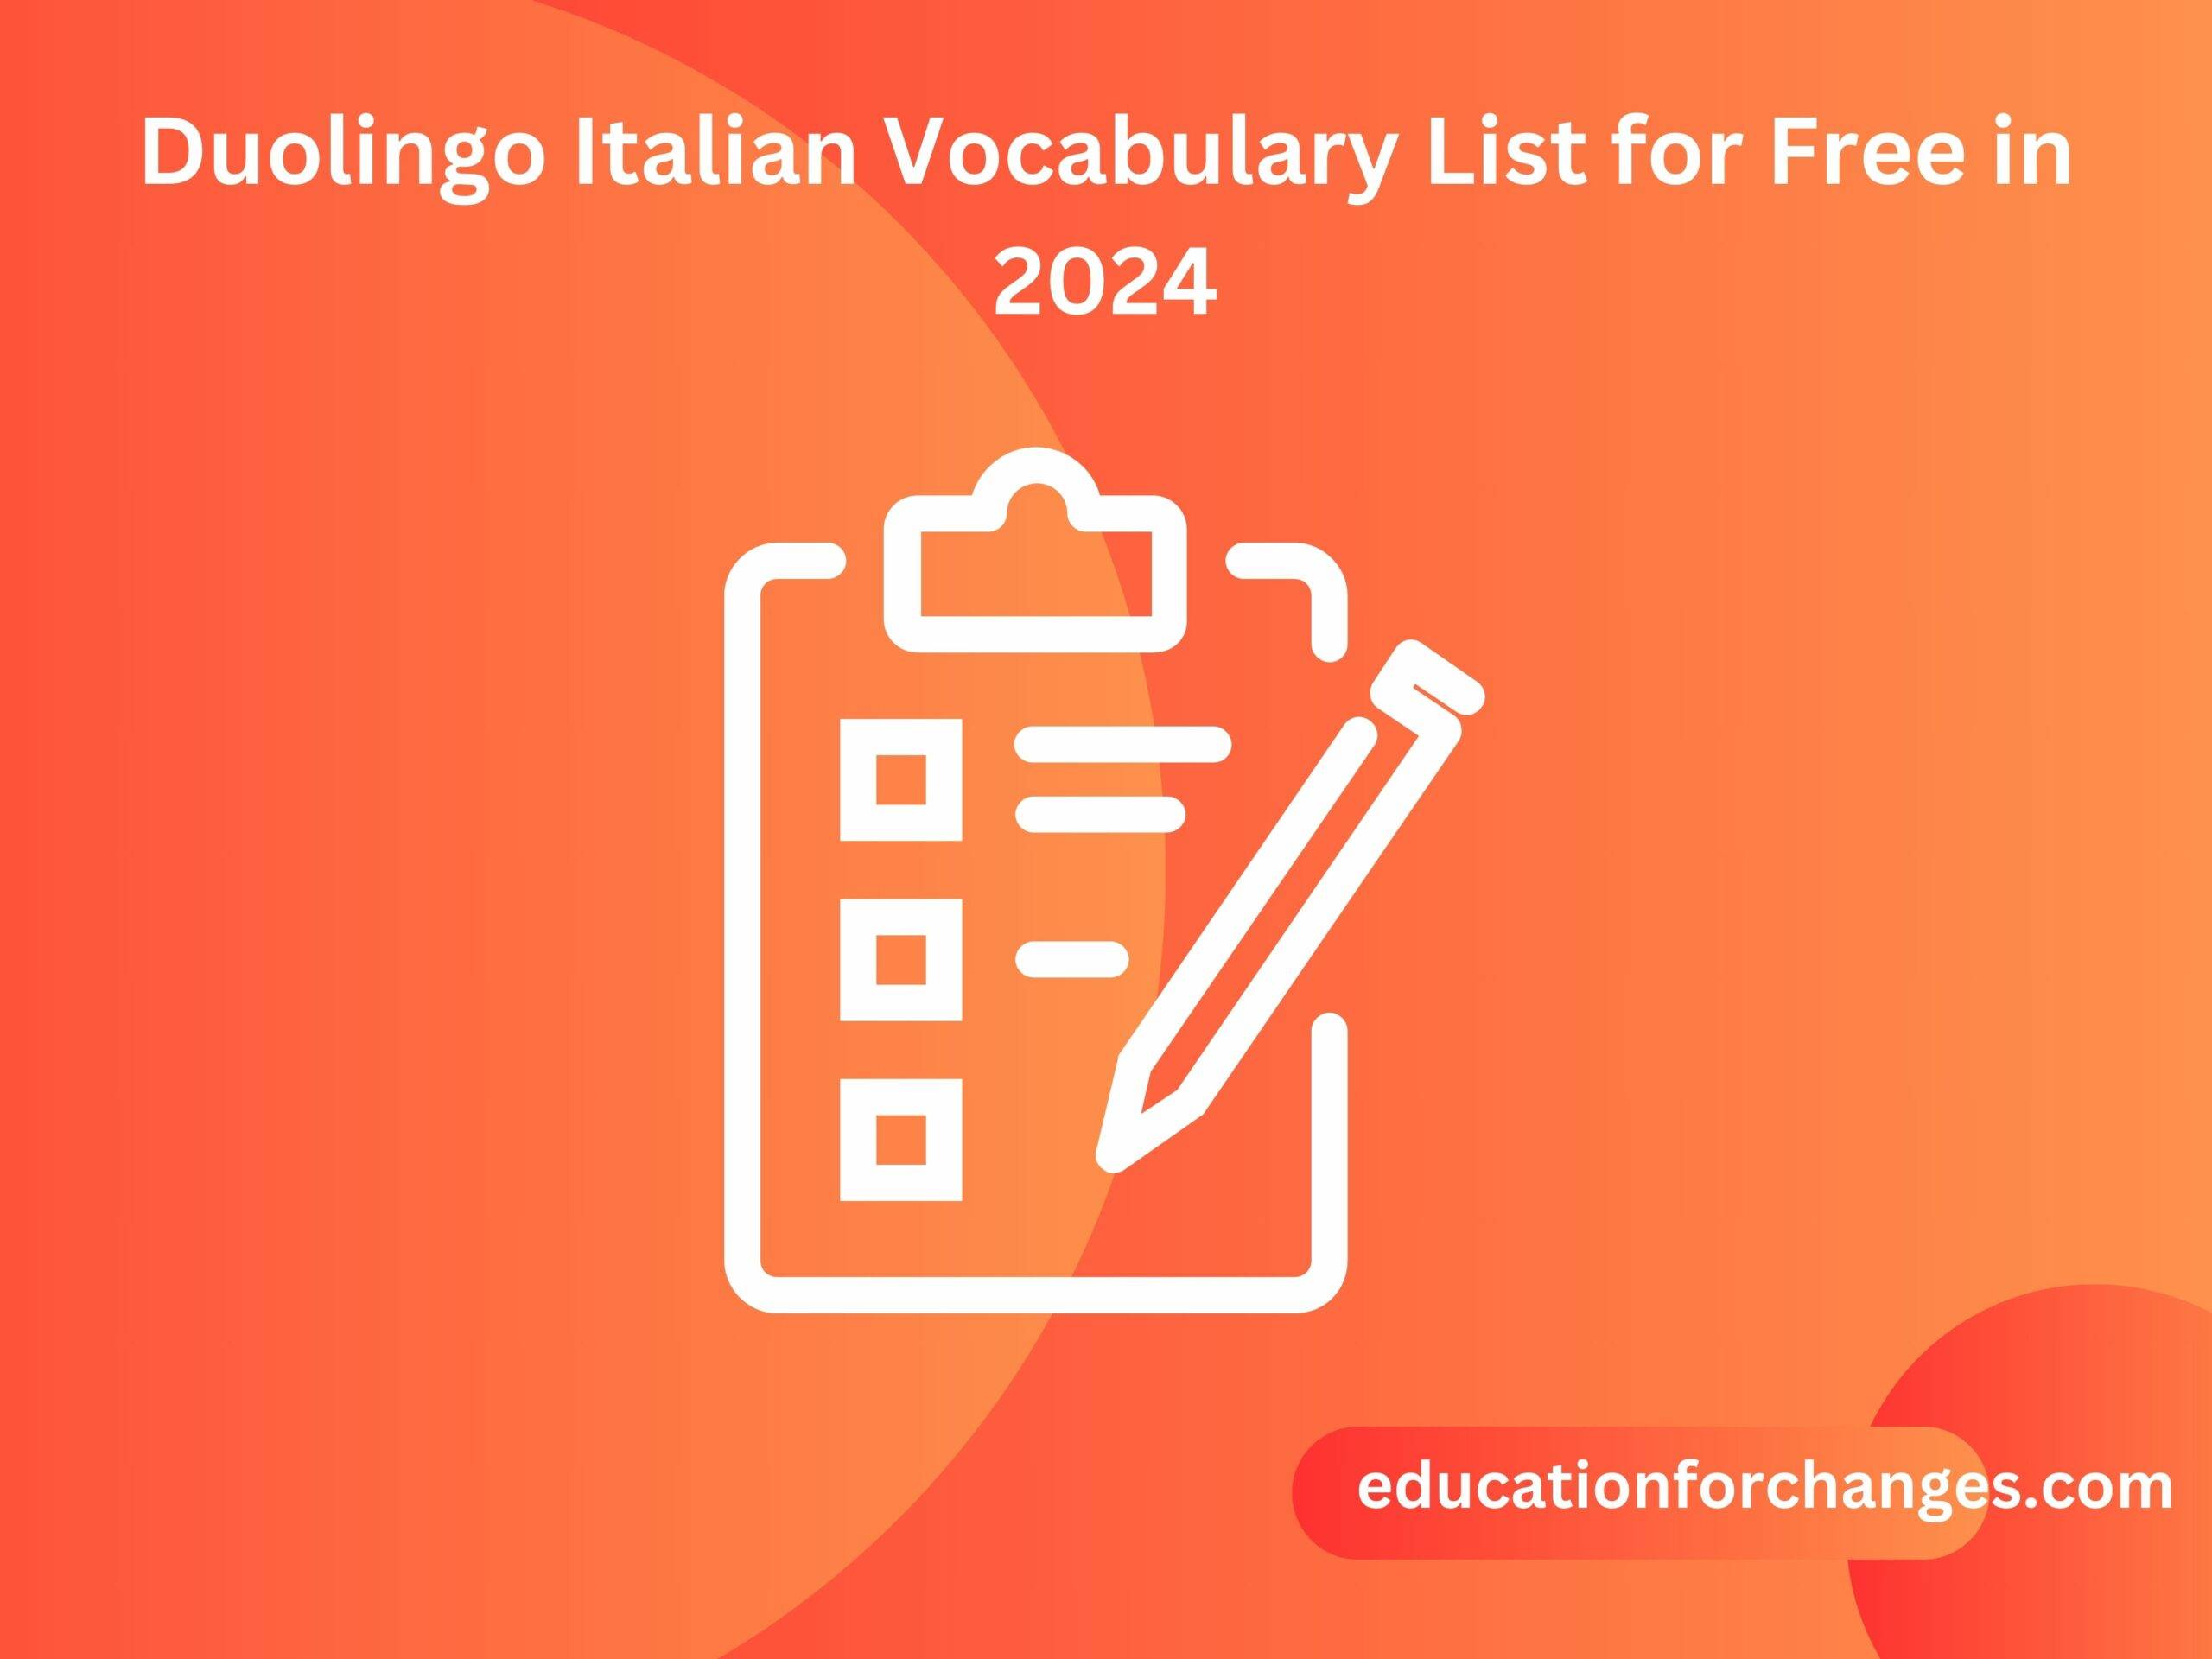 Duolingo Italian Vocabulary List for Free in 2024